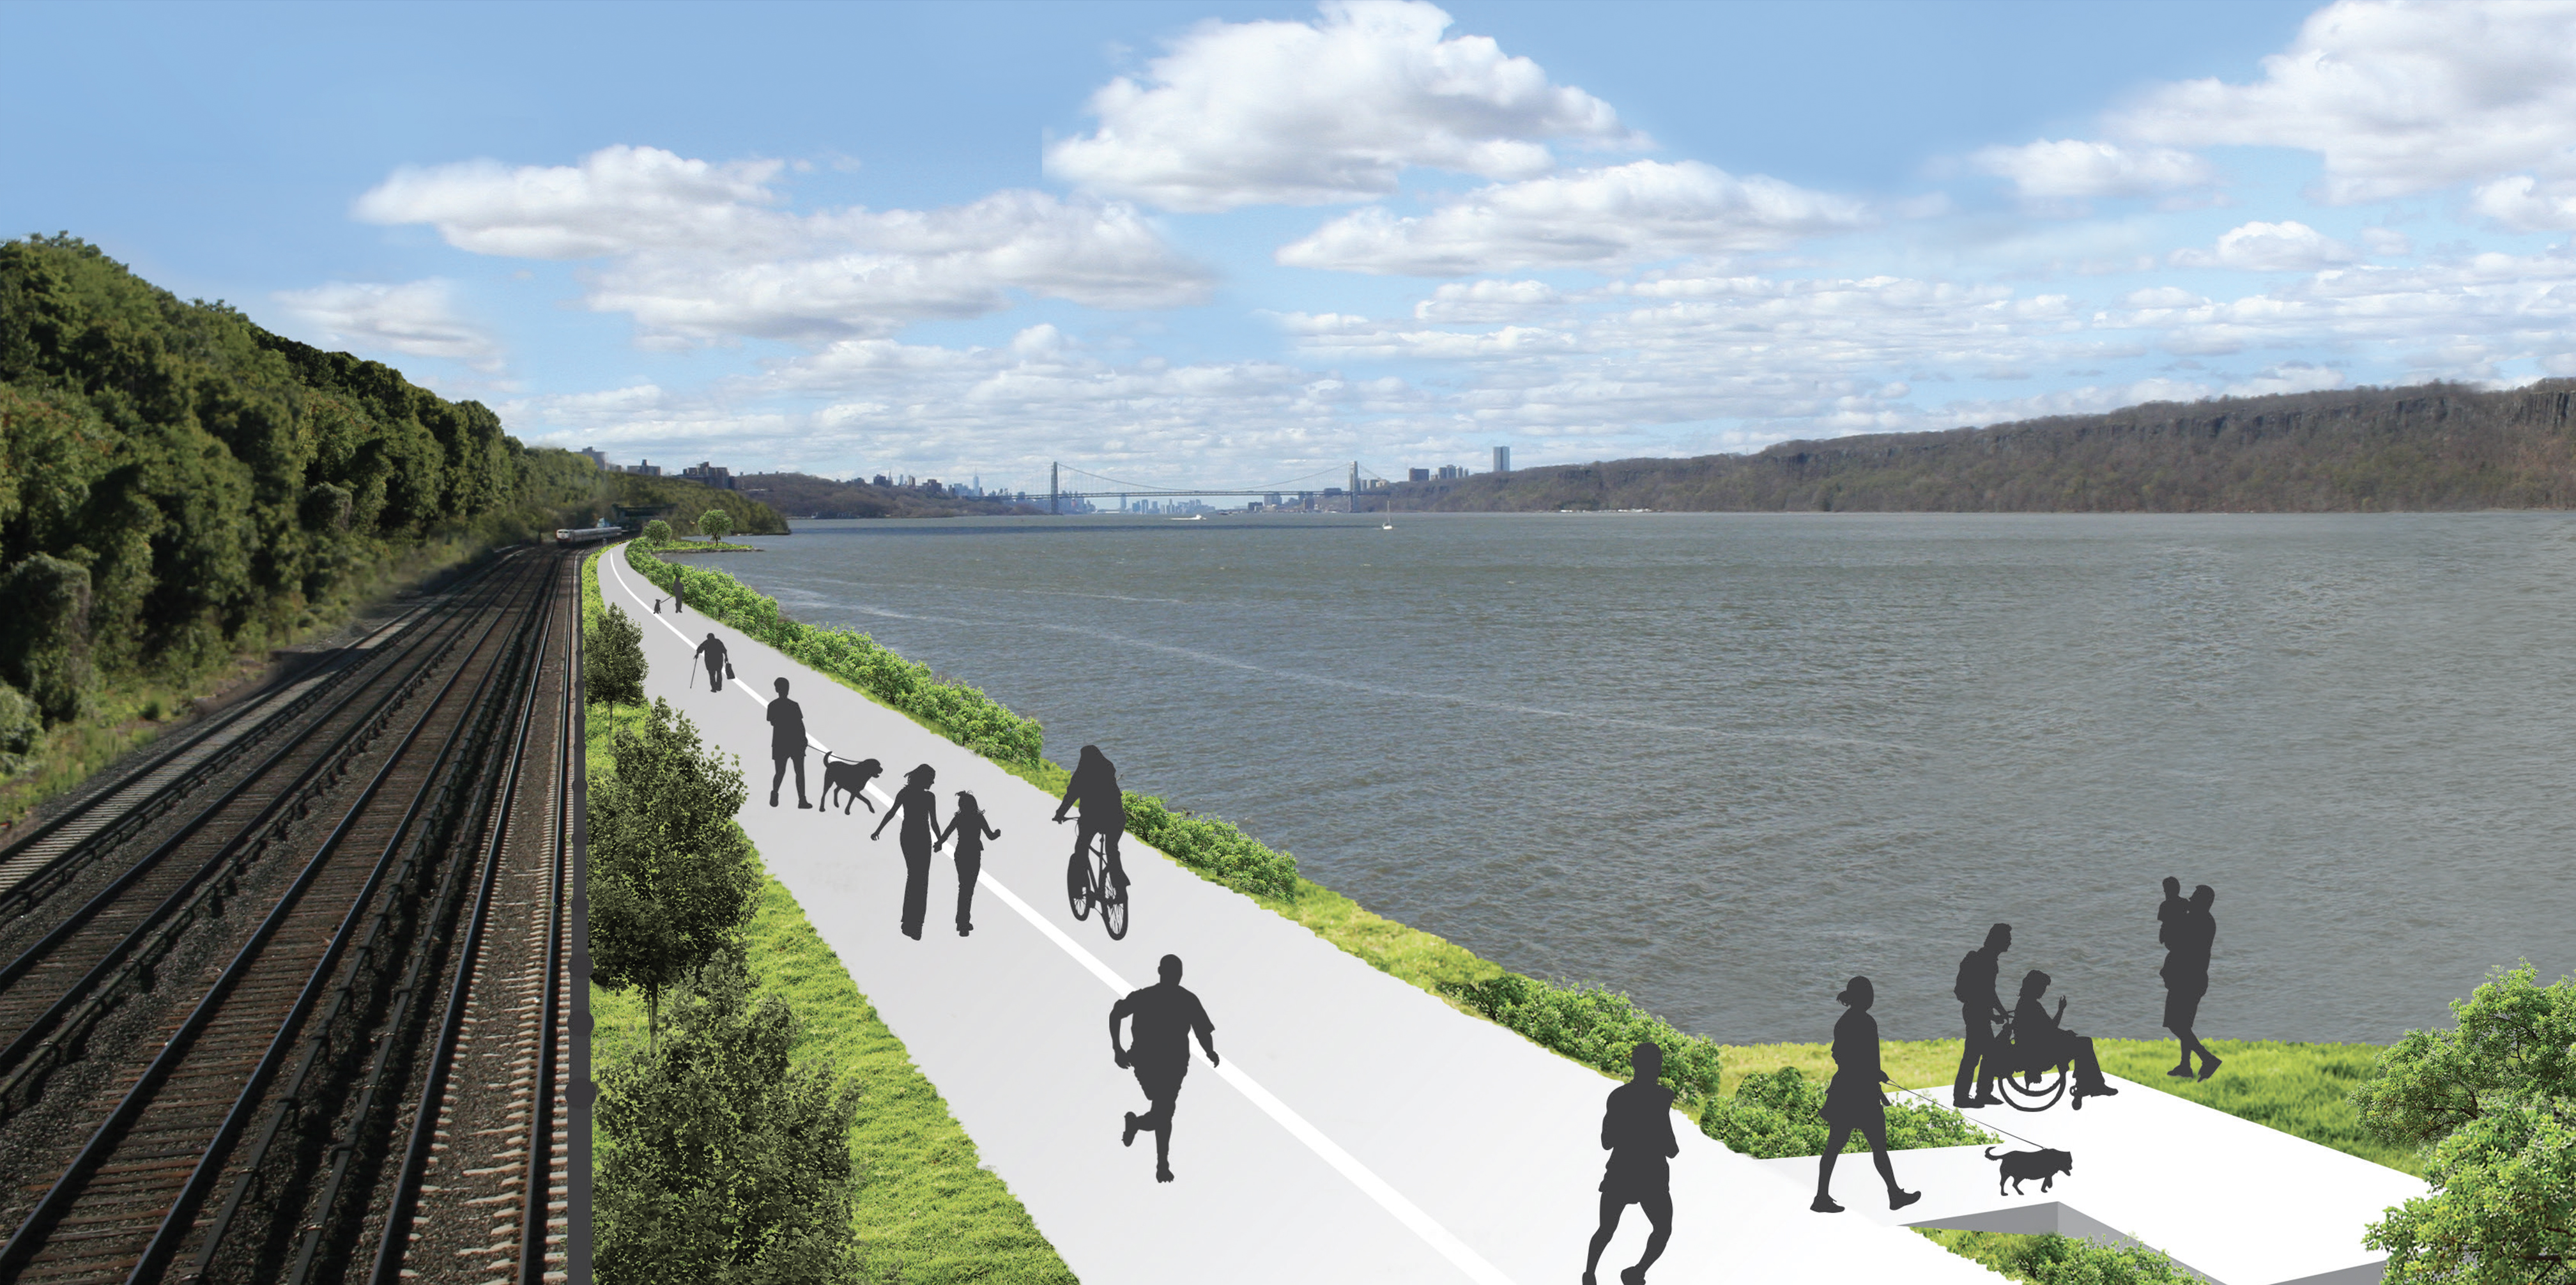 Hudson River Greenway - After